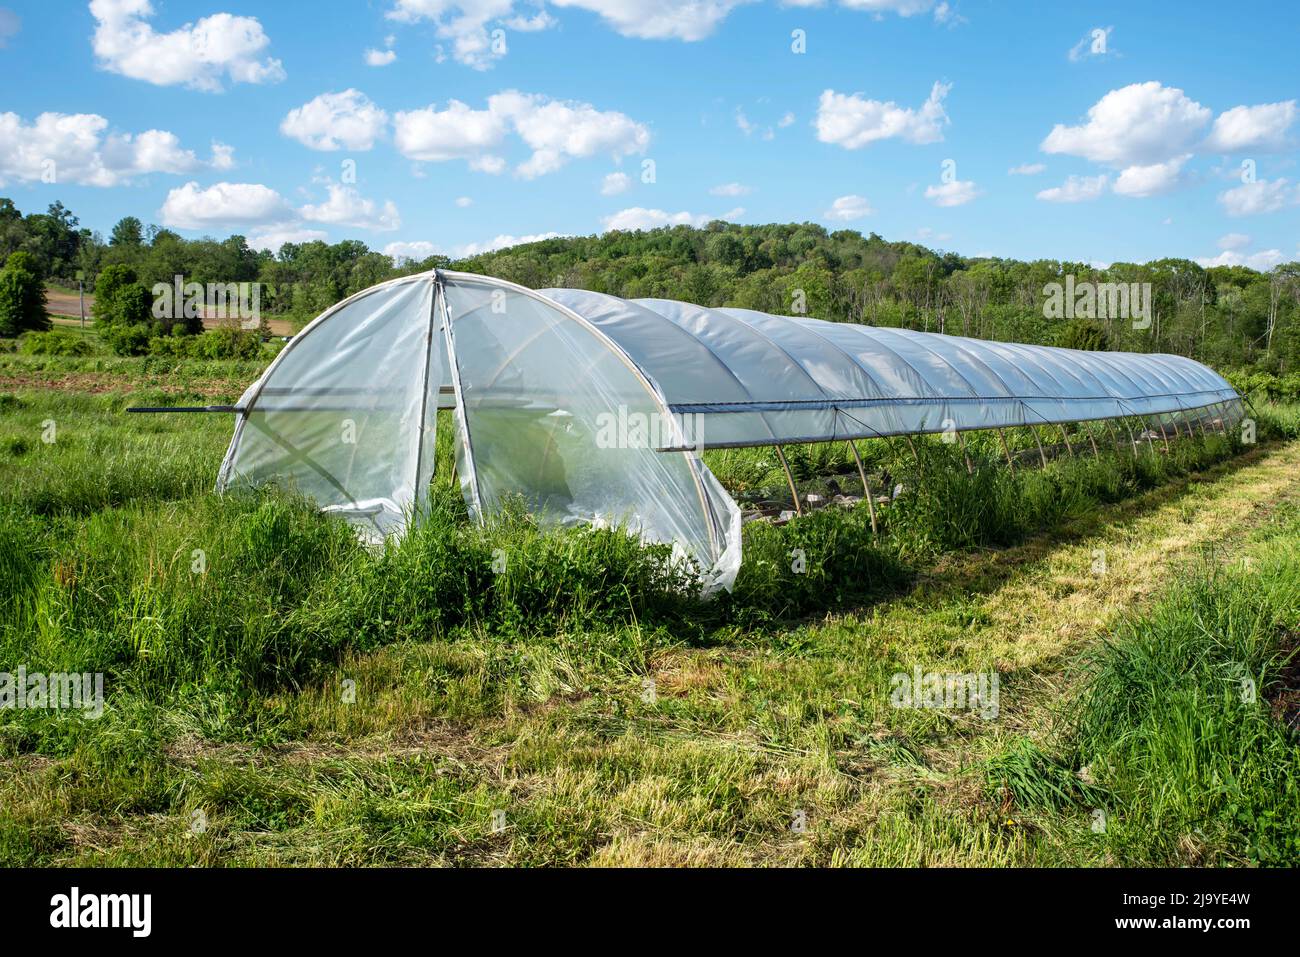 Idyllic organic garden greenhouse in grass field with blue sky Stock Photo